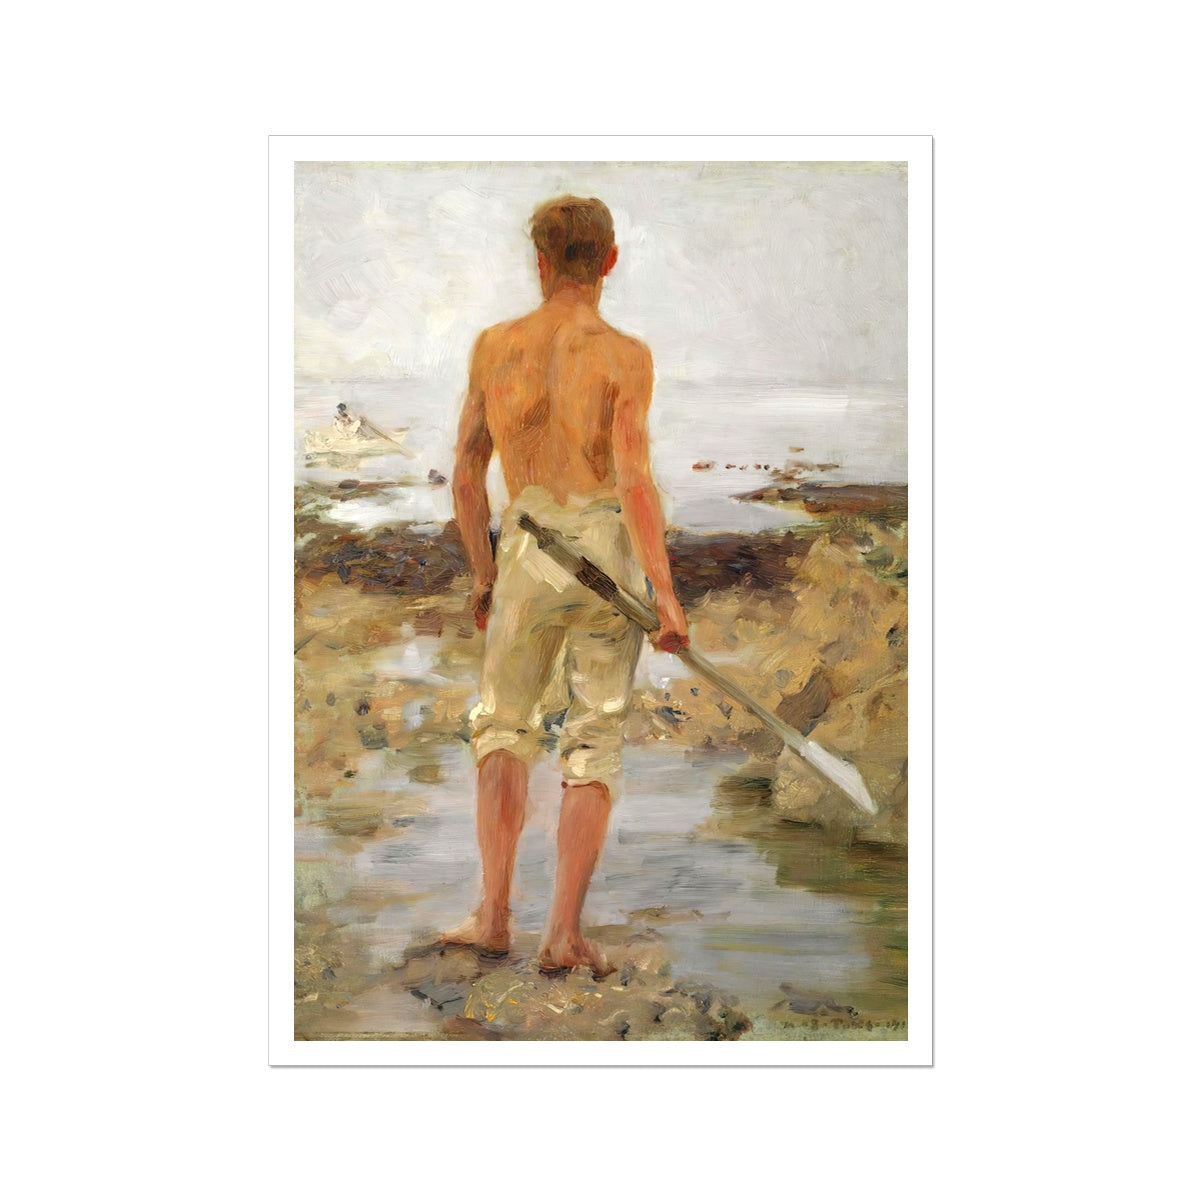 Henry Scott Tuke Open Edition Art Print. A Boy with an Oar. Art Gallery Historic Art